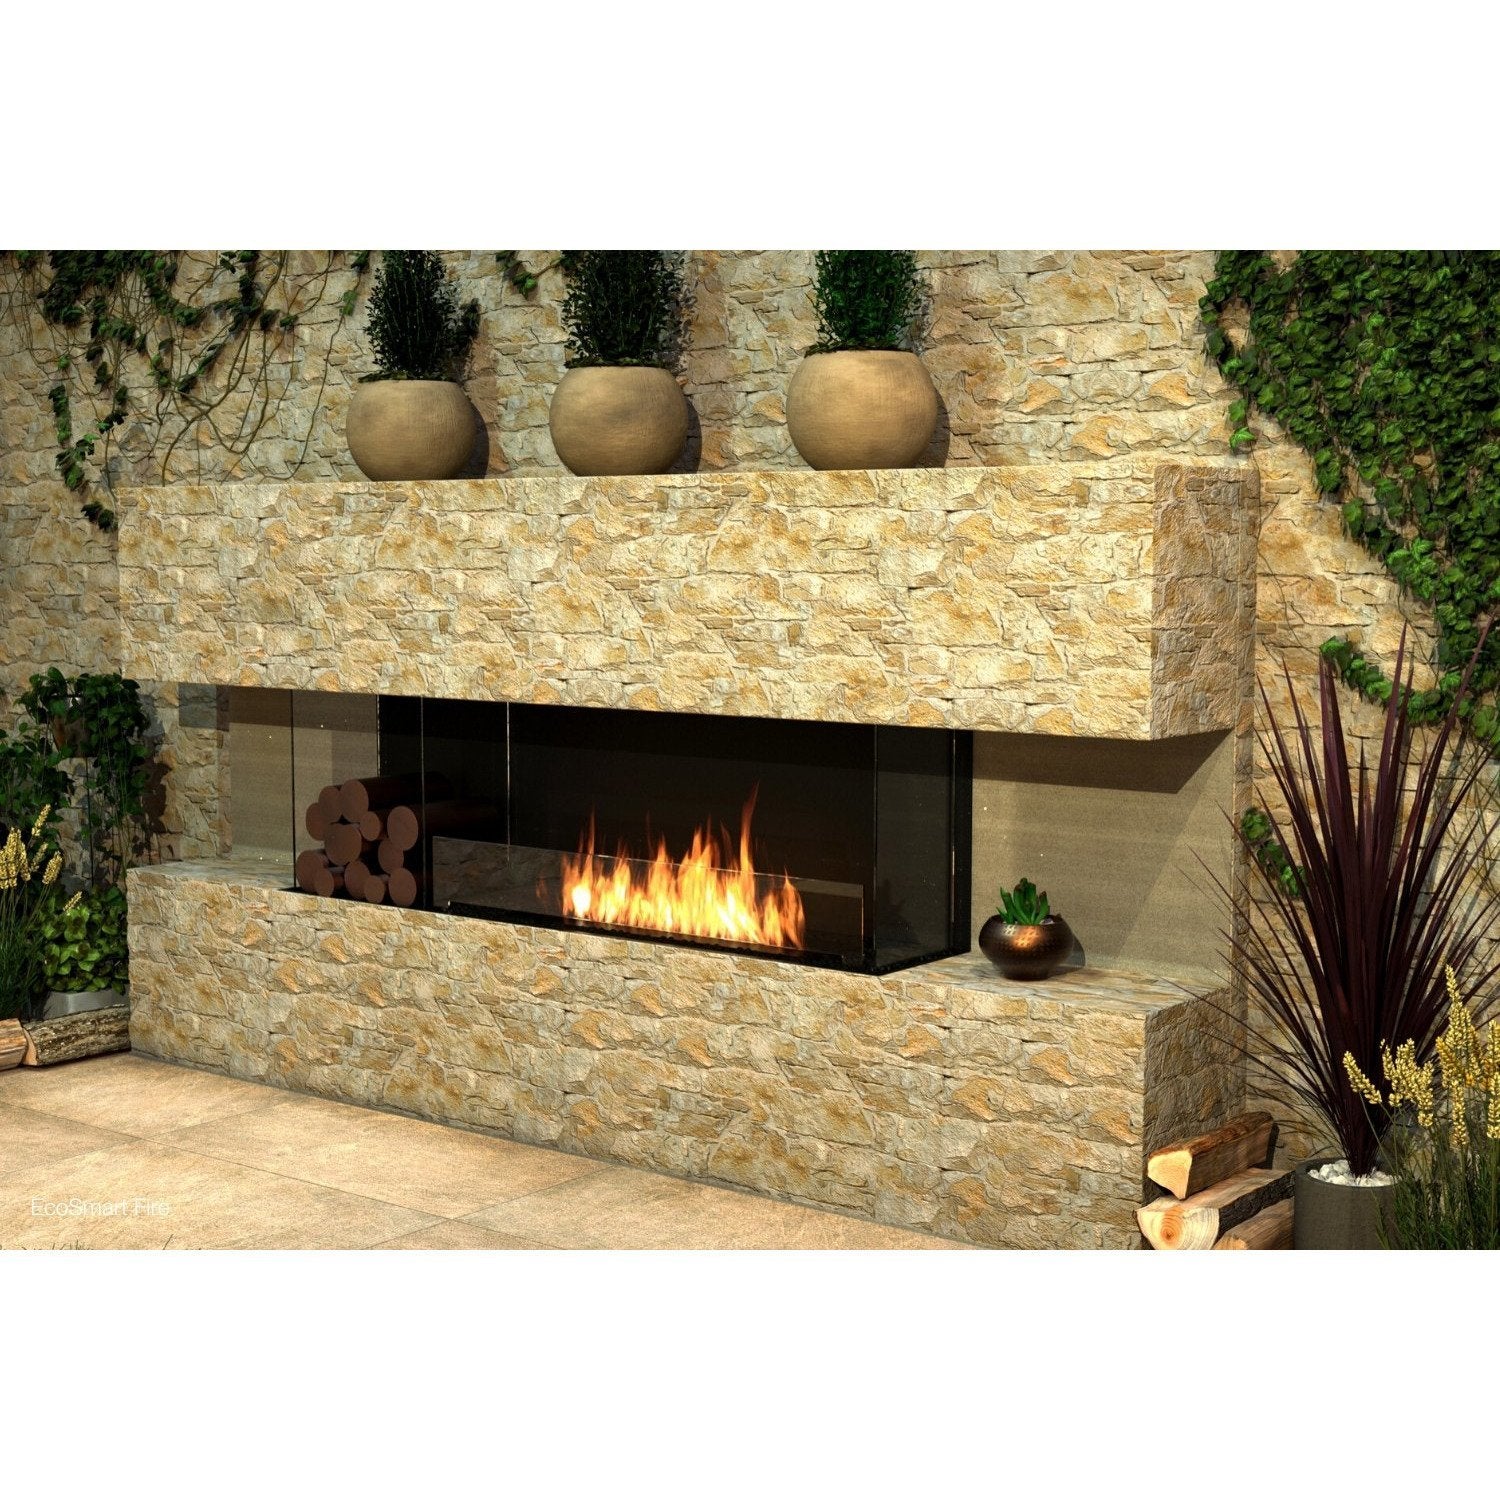 EcoSmart Fire Flex Fireplace with Copper Logs